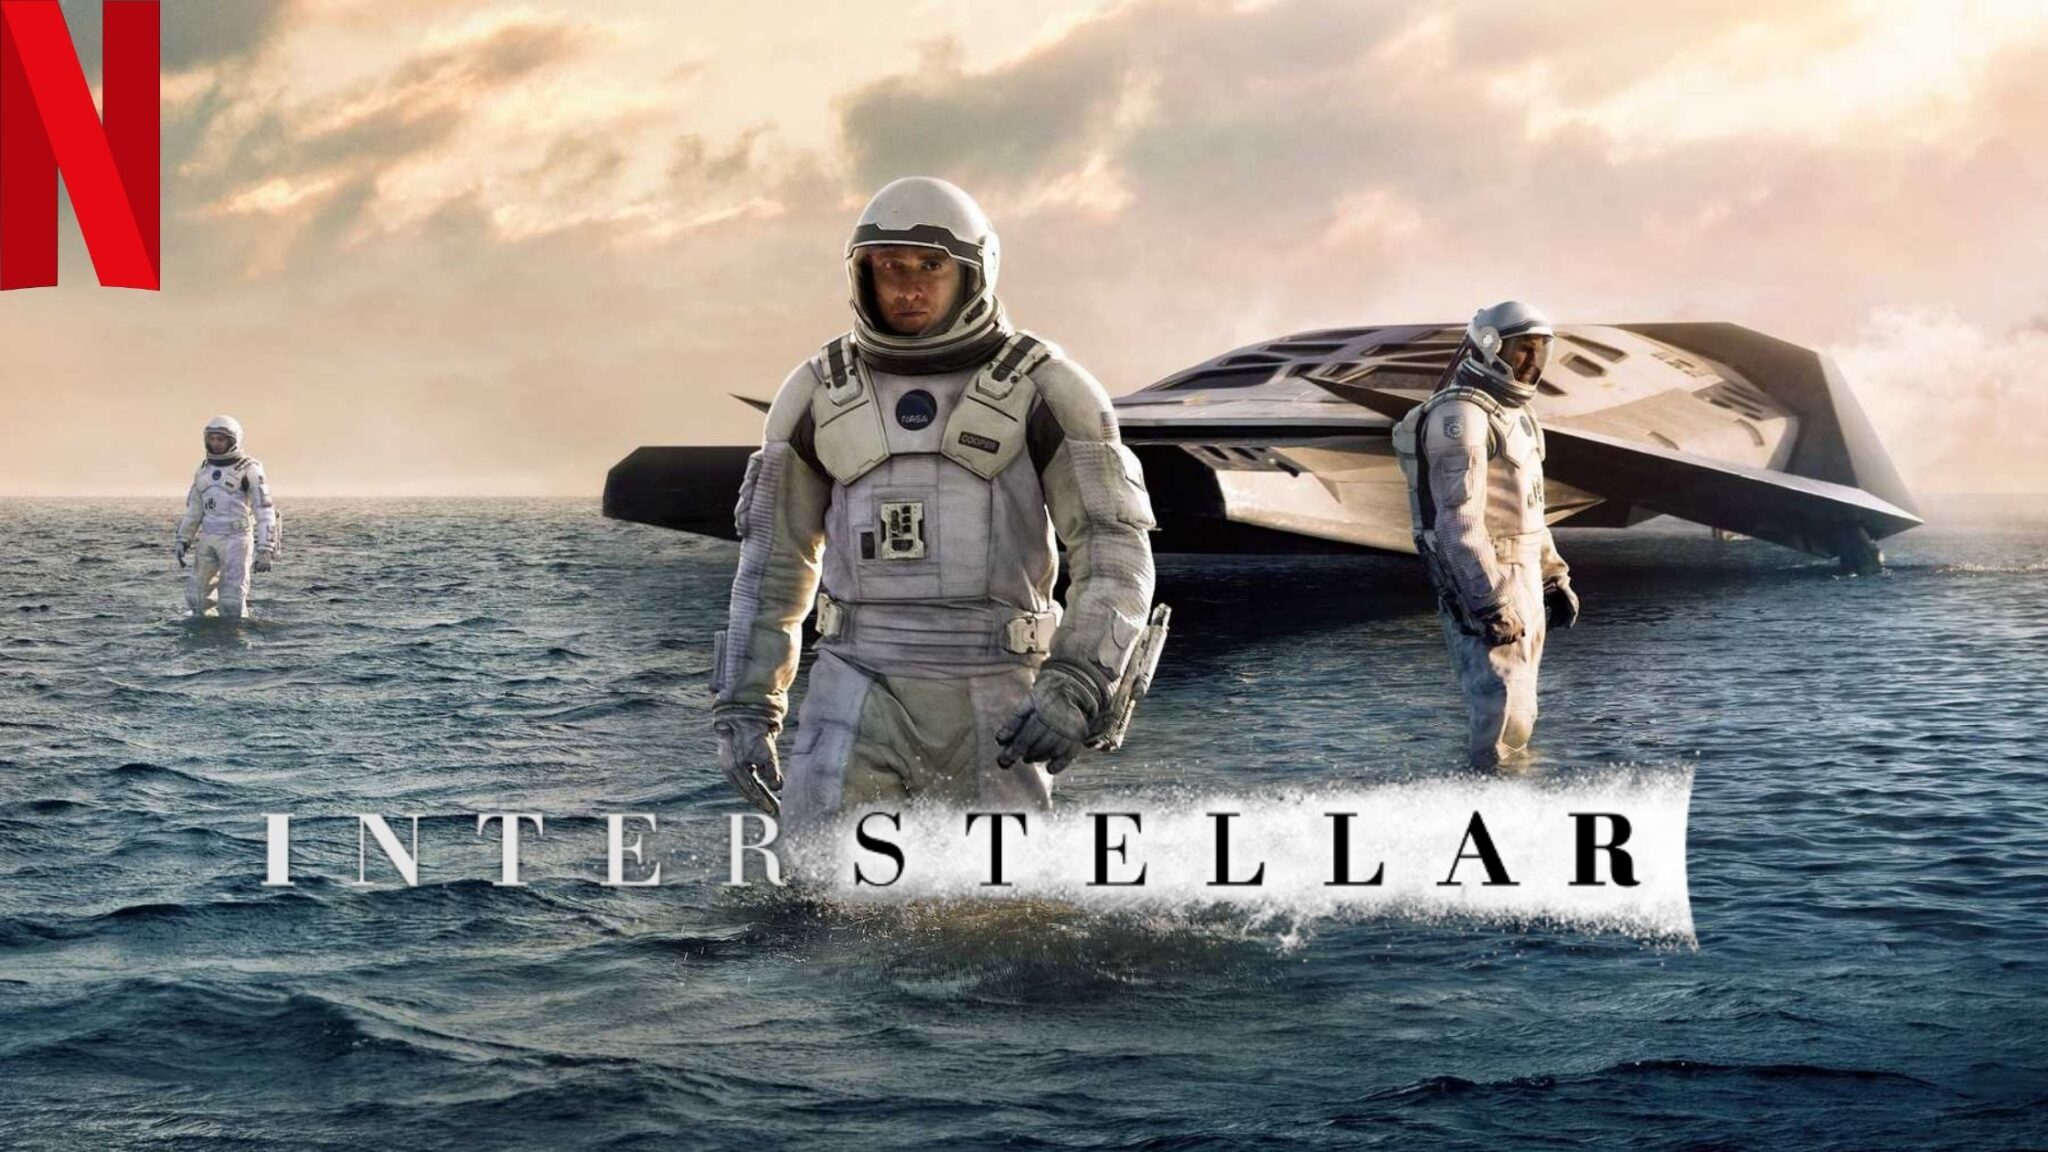 interstellar full movie download mp4